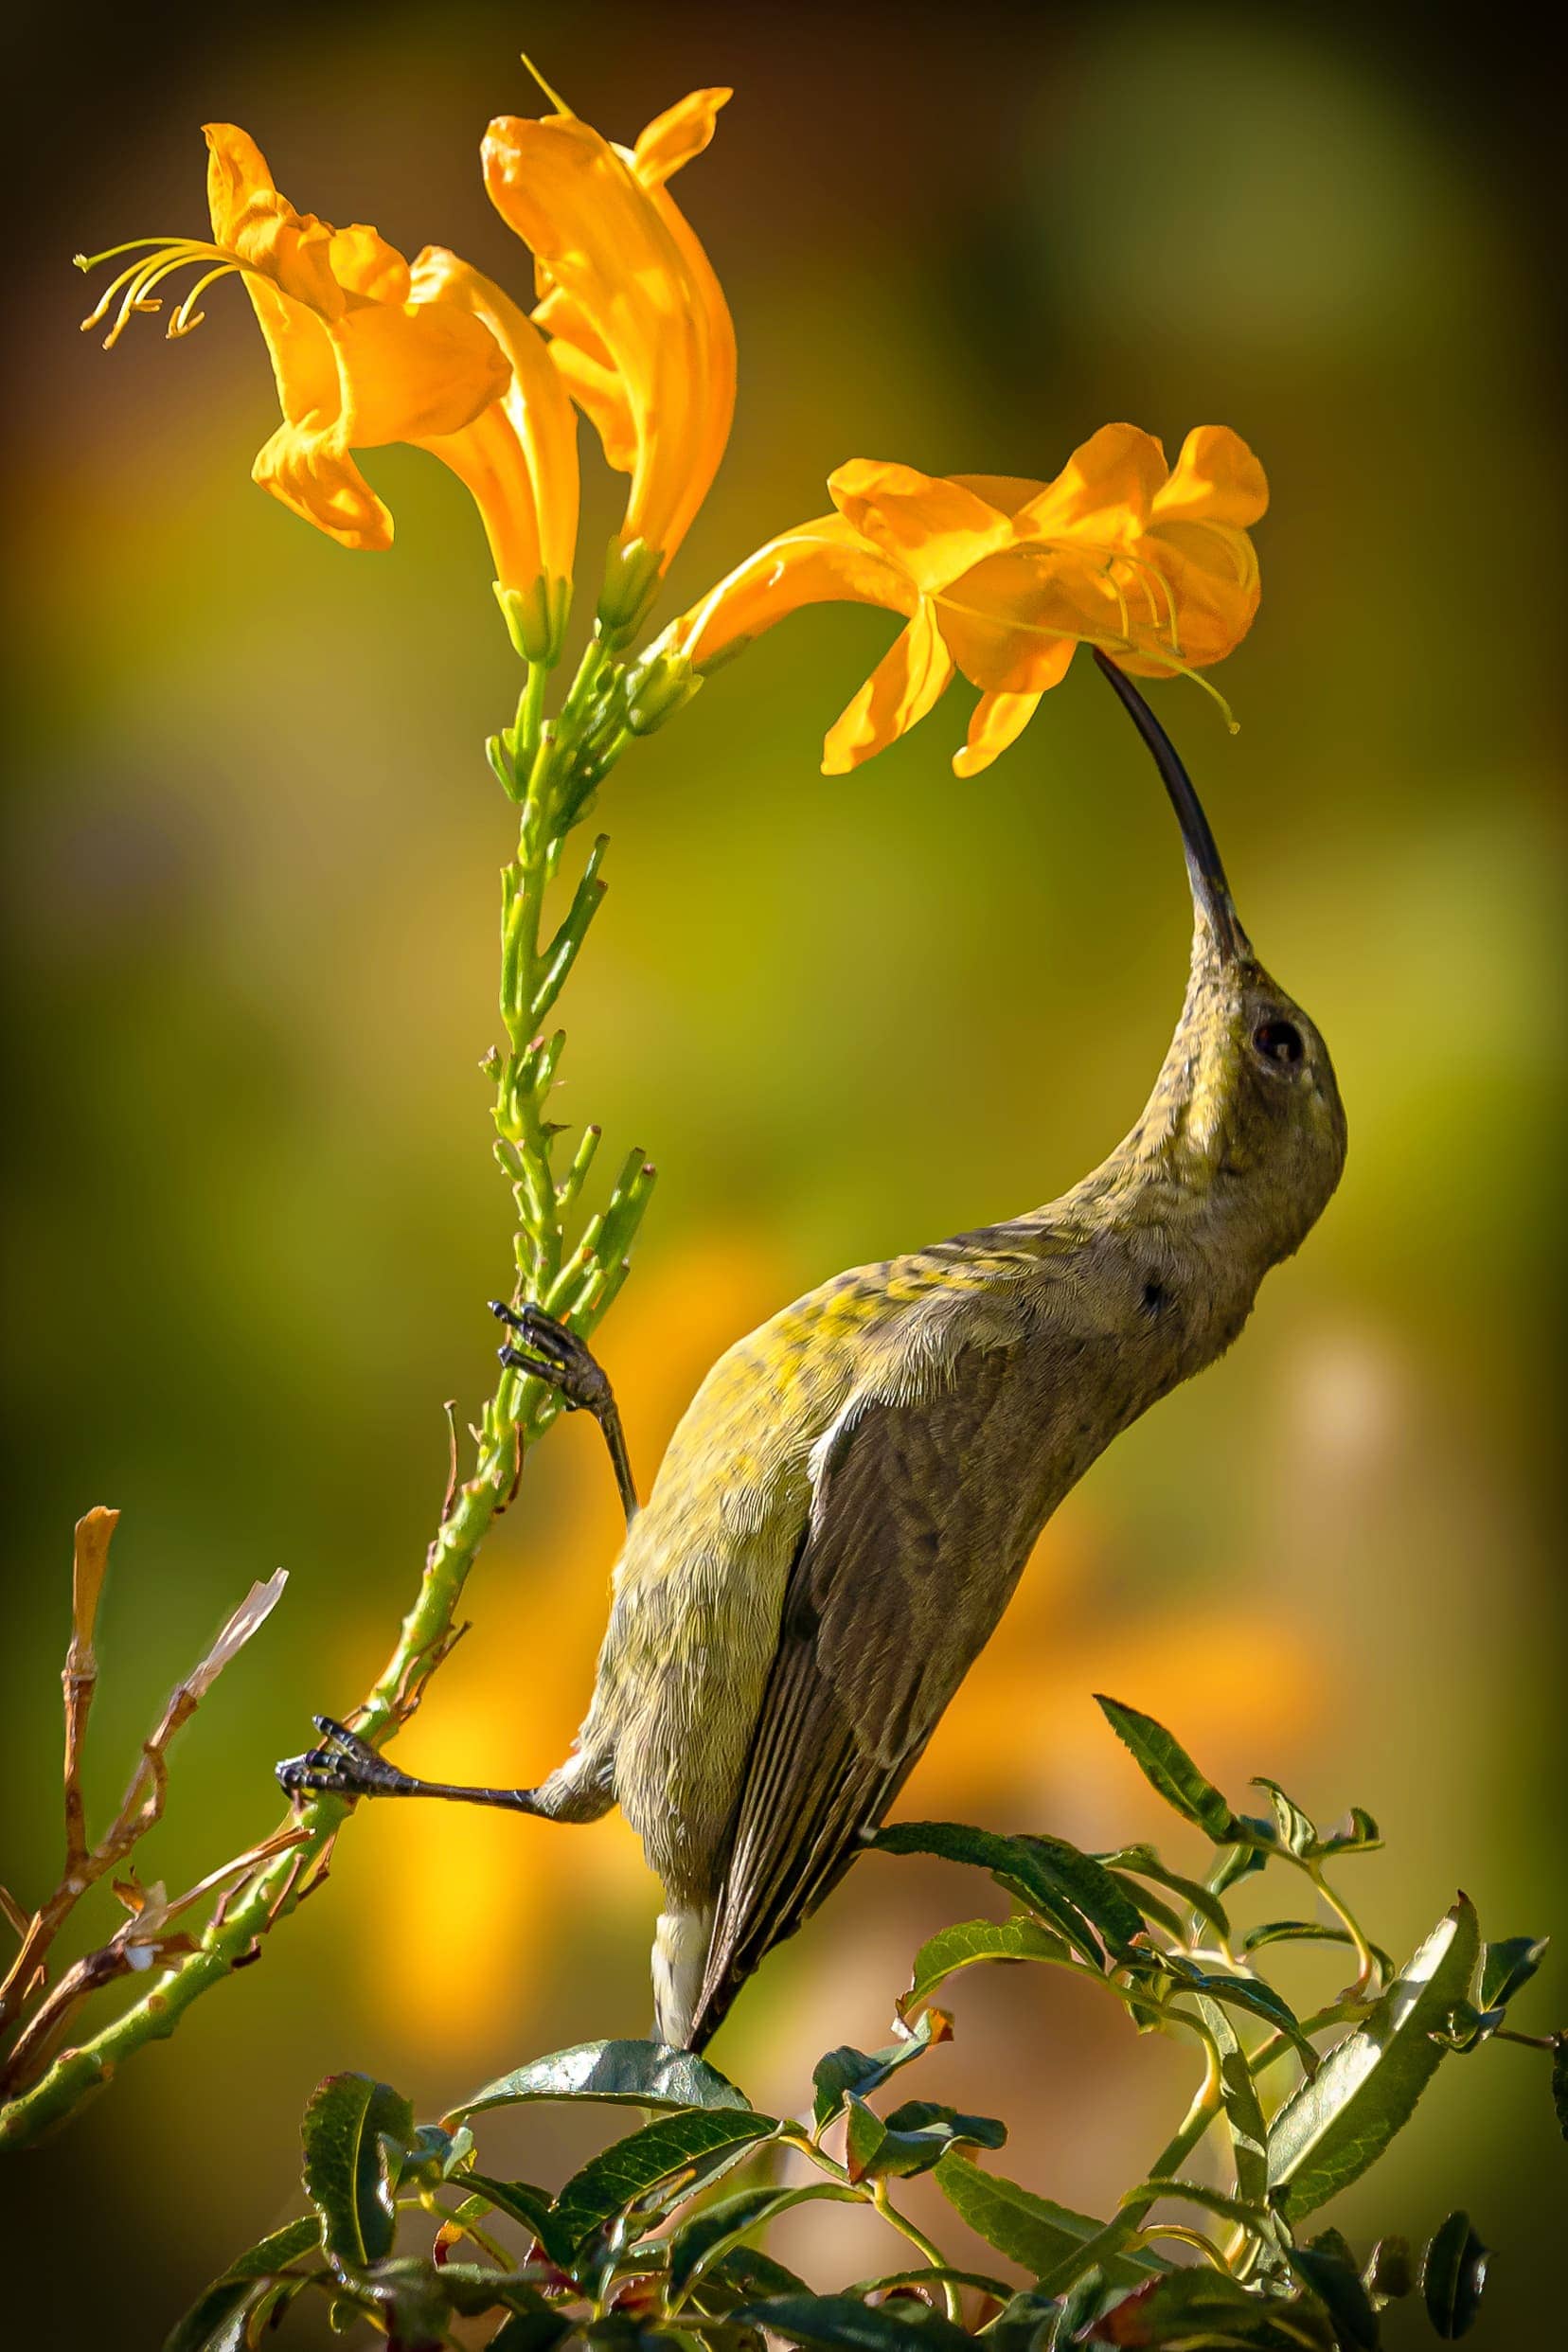 Female Malachite Sunbird - a yellow brown slim bird with a ling slender beak . It is inserting its beak into the yellow flower 